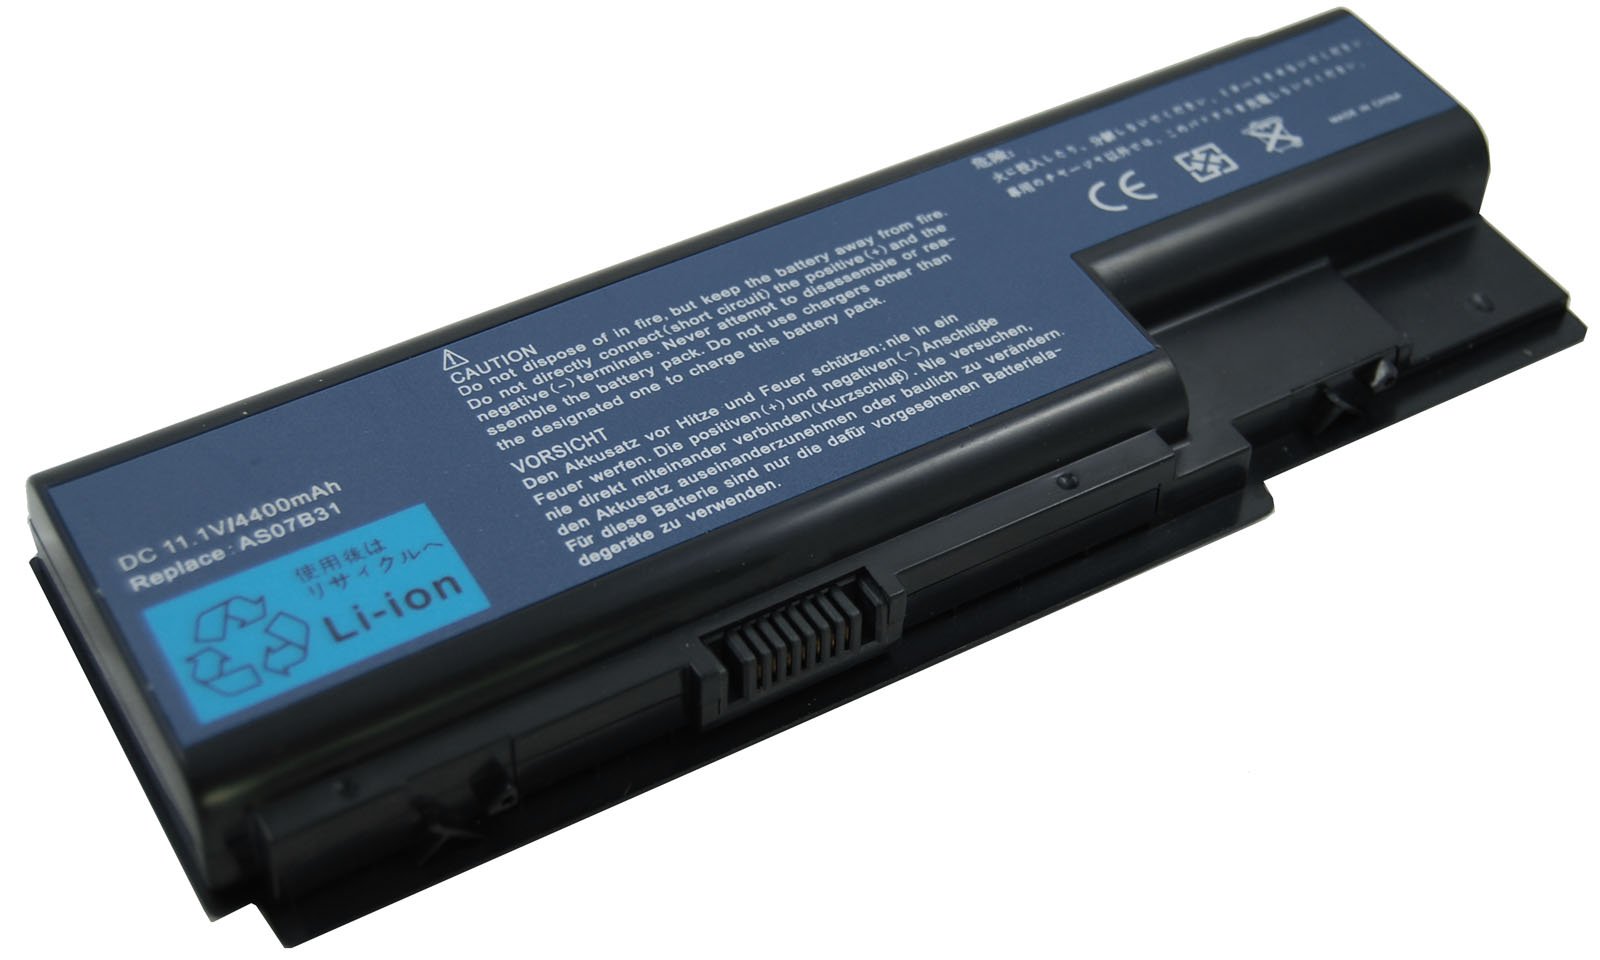 Hcl Laptop battery repair/replacement